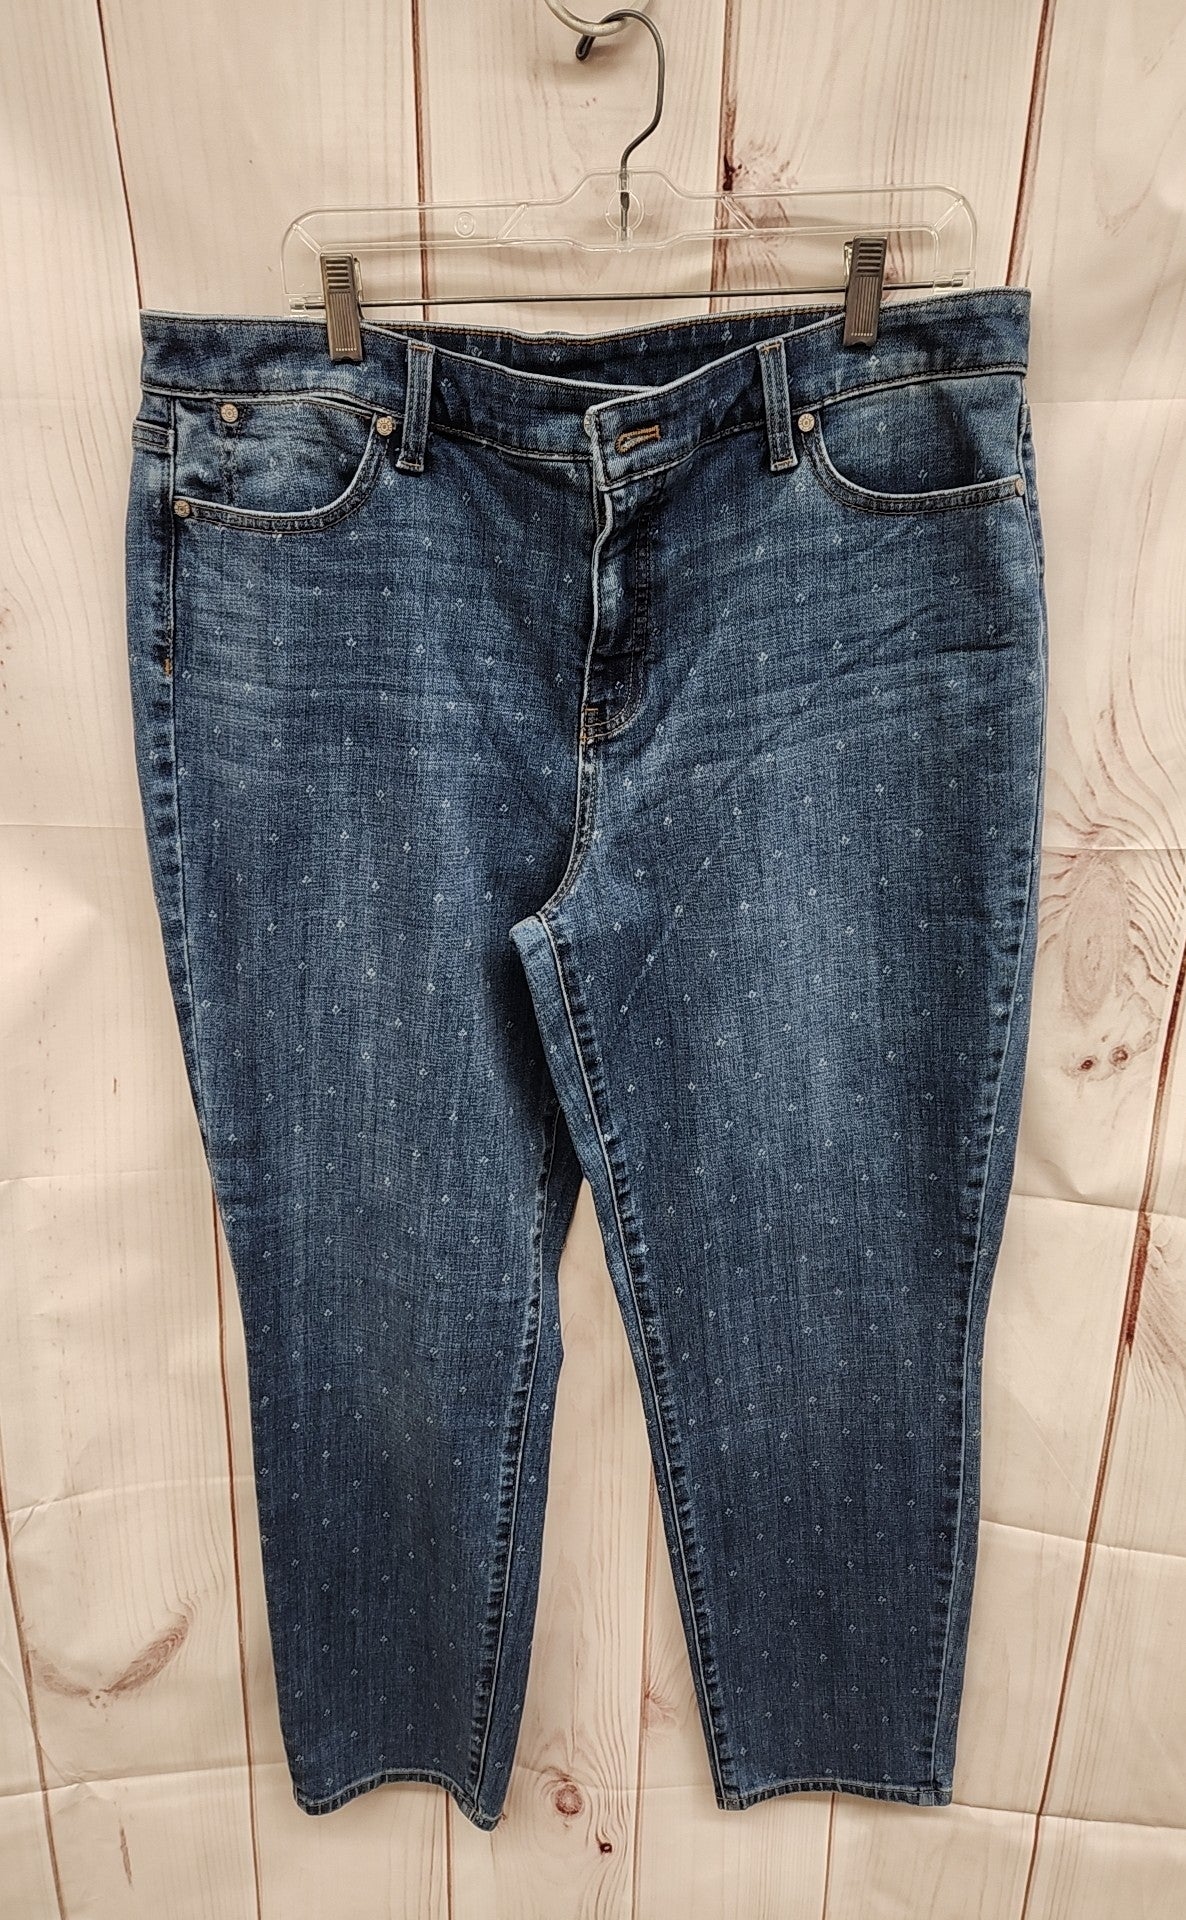 Talbots Women's Size 33 (15-16) Slim Ankle Blue Jeans